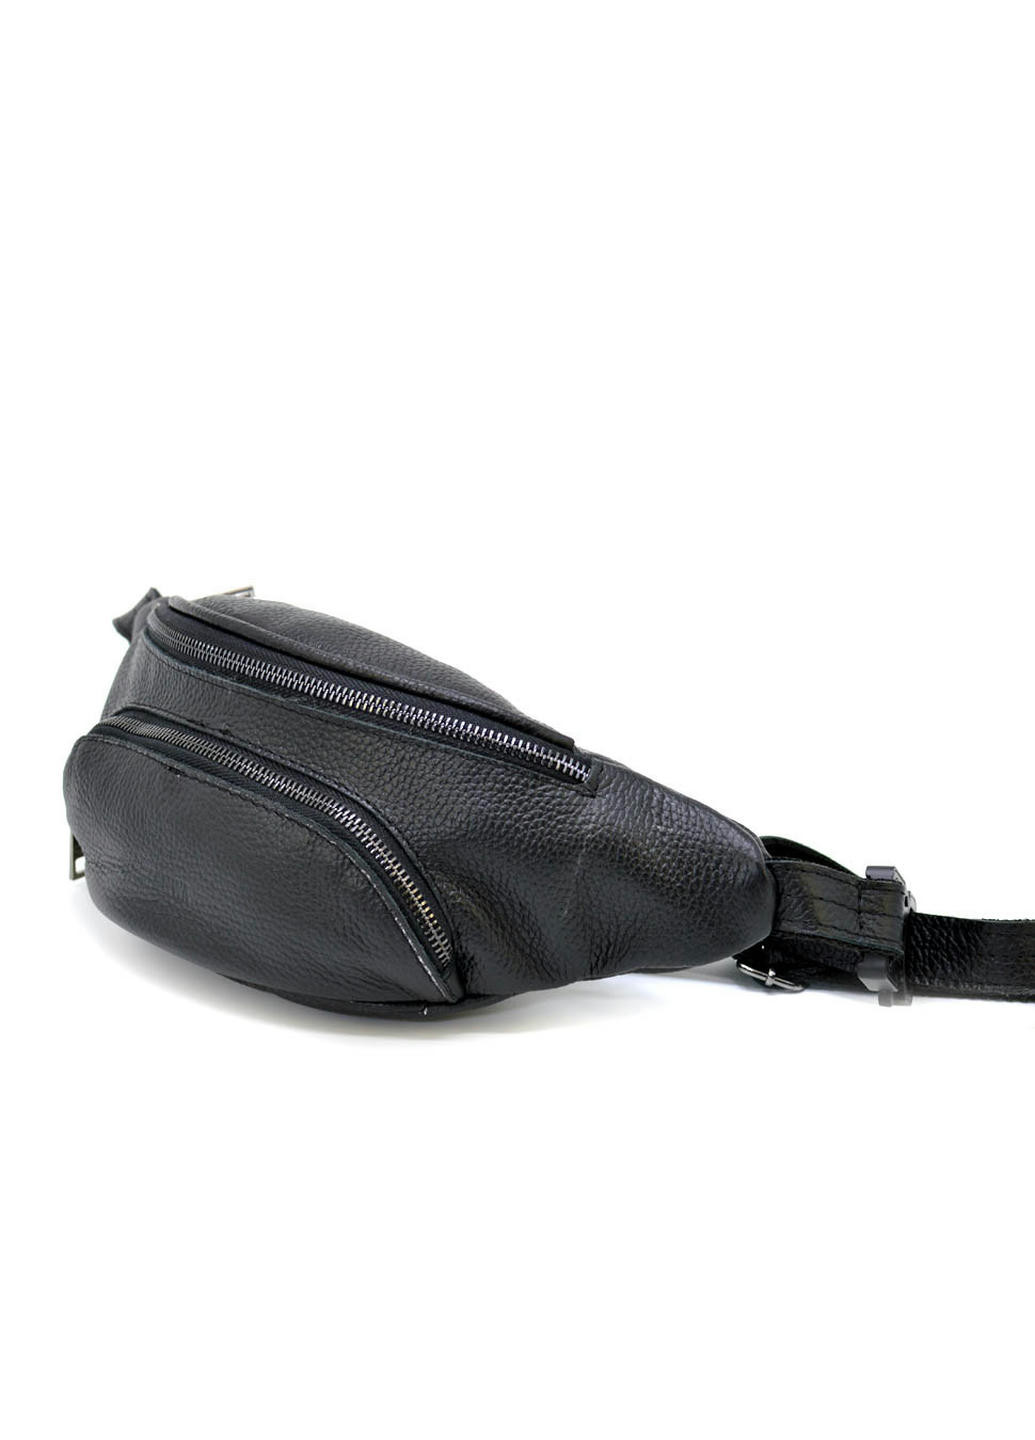 Напоясная сумка кожаная с передним карманом FA-30351-3md TARWA (257657175)